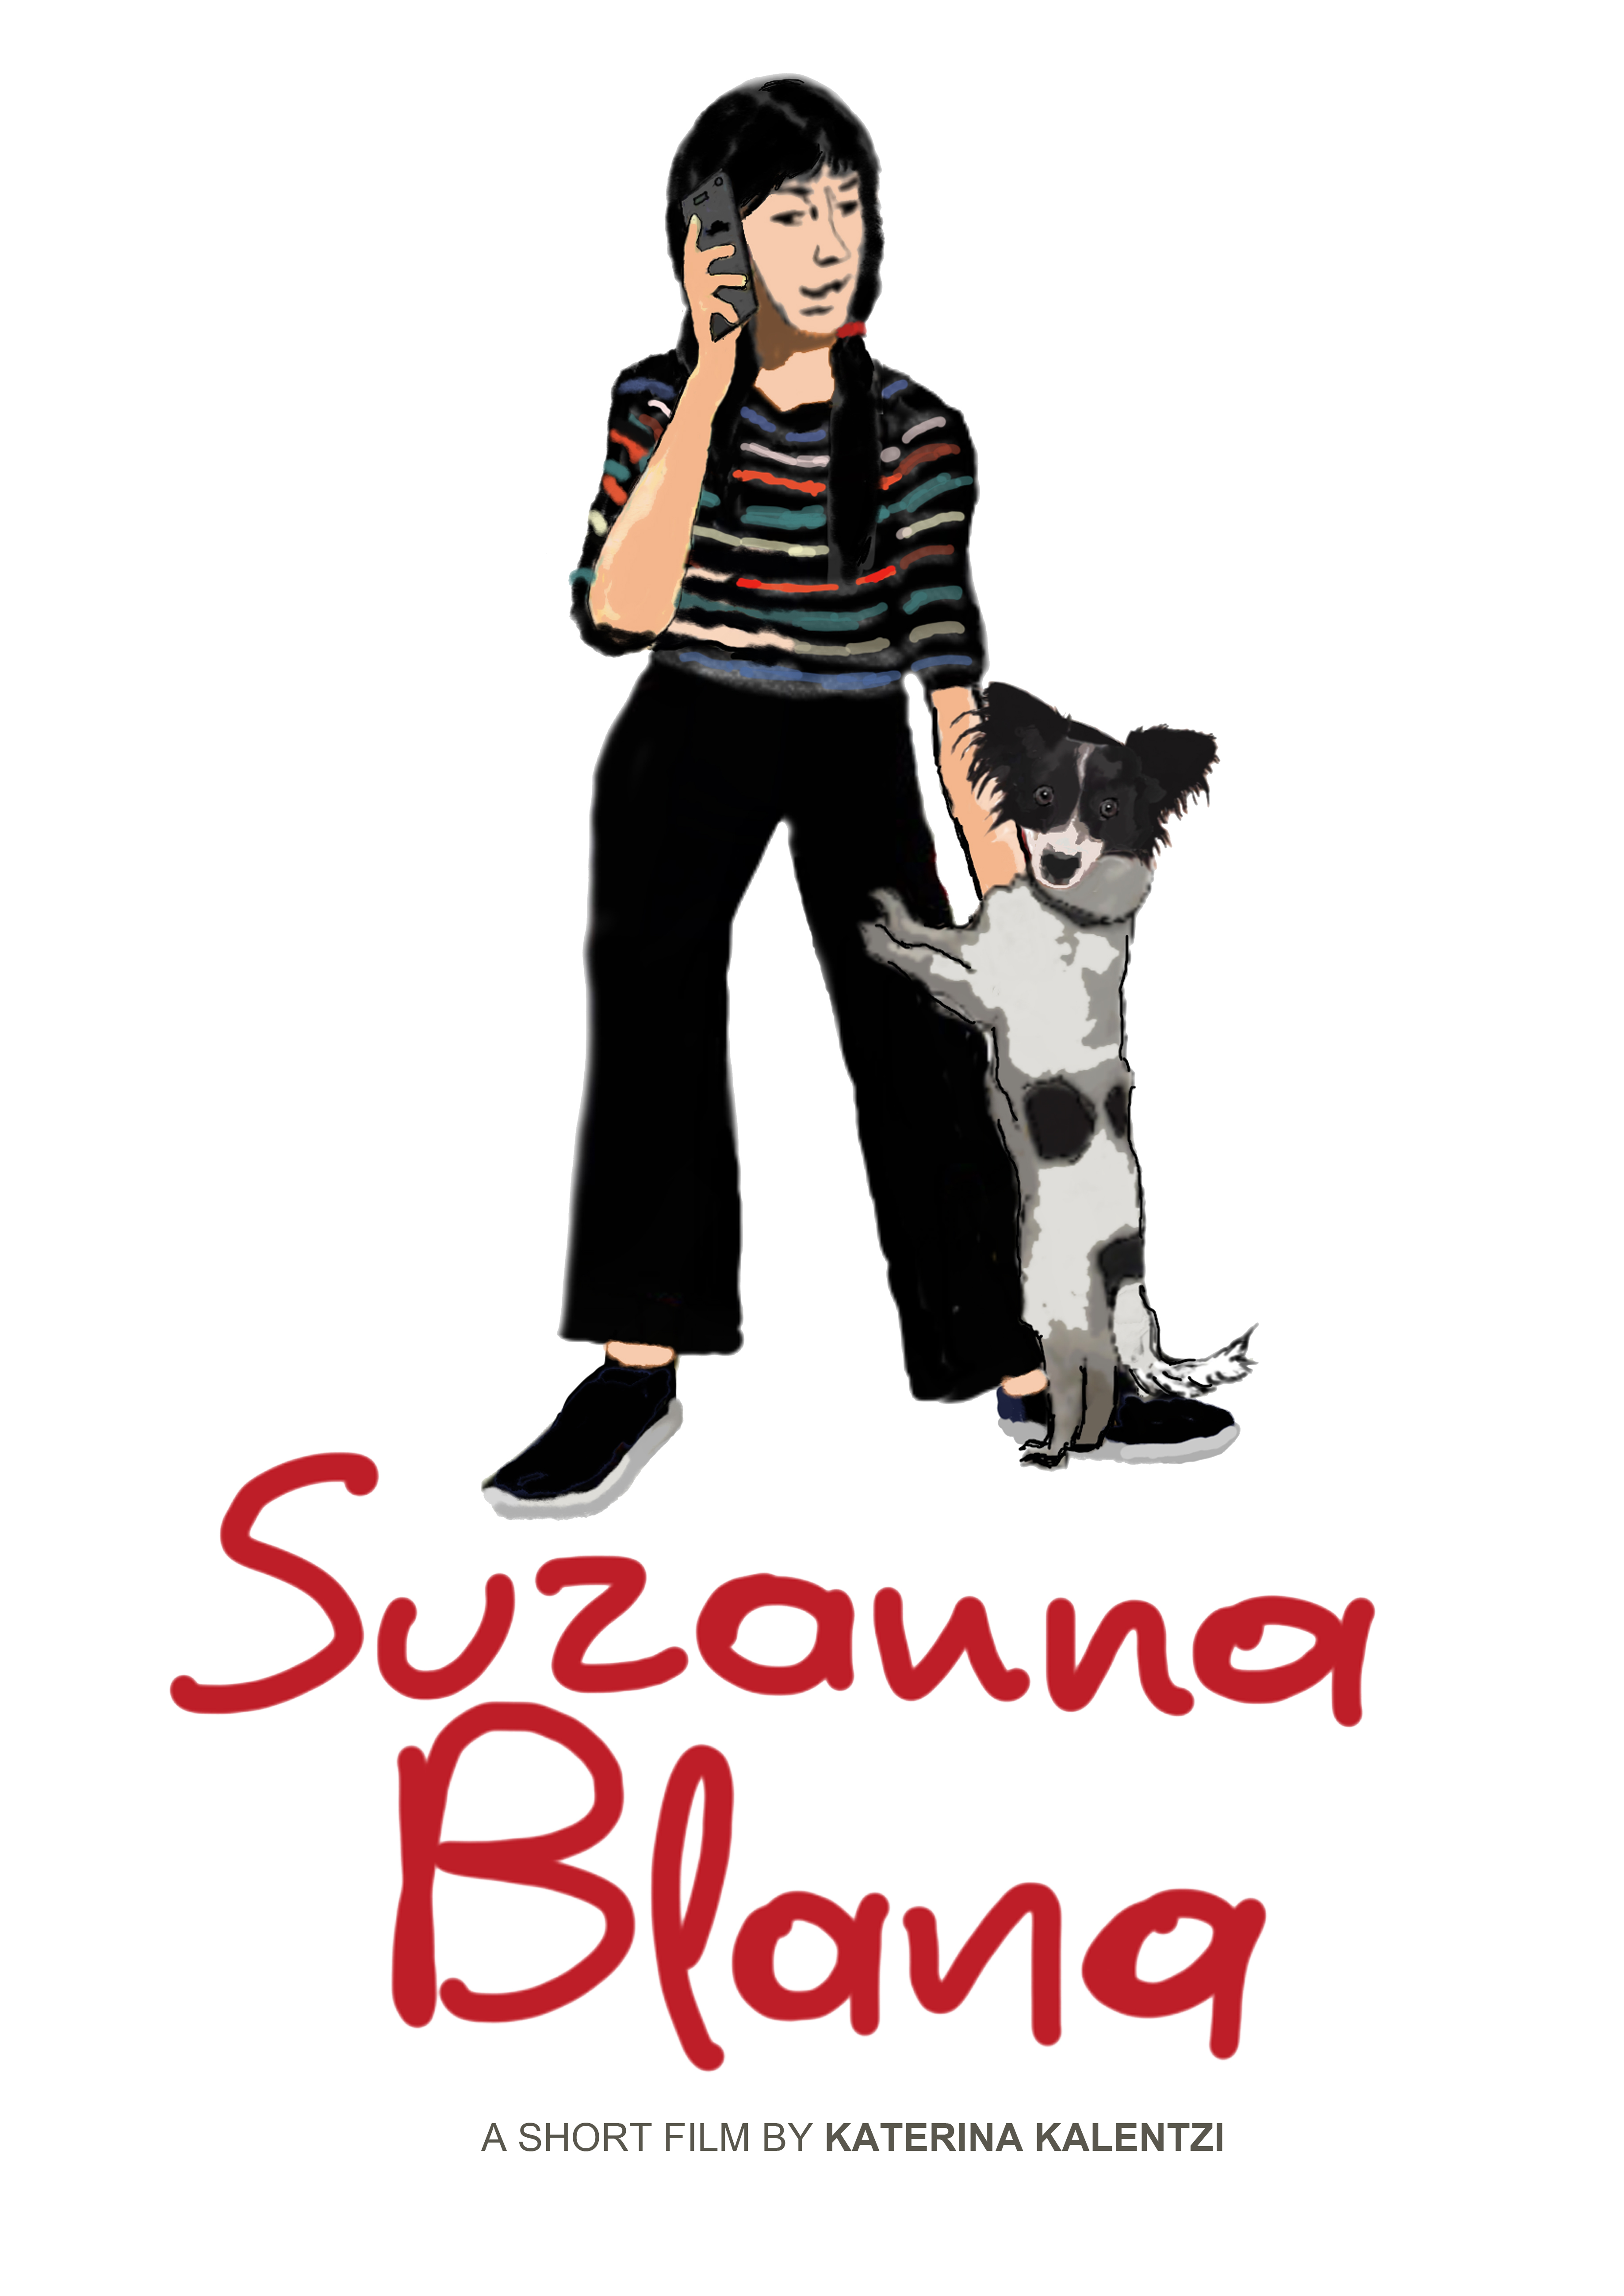 Suzanna Blana